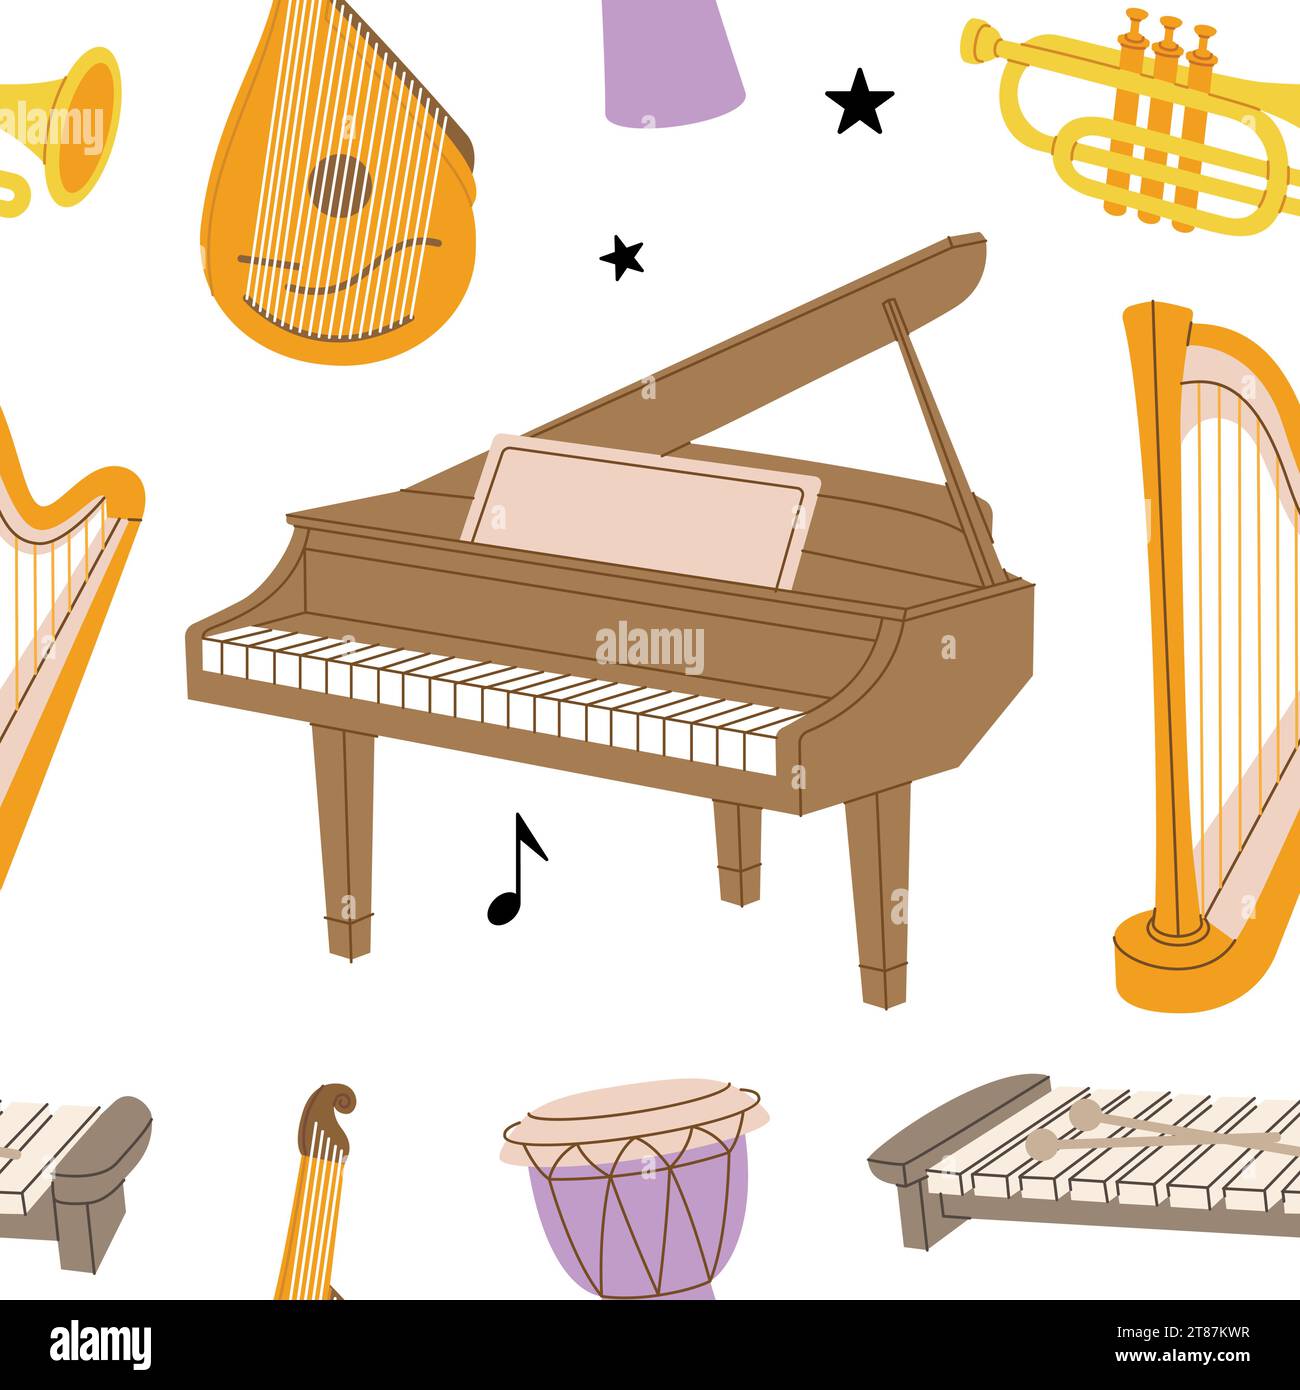 Nahtloses Banner für Musikinstrumente. Tuba, Trompete, Trommelflöte, Horn, Laute, Violine, E-Bass-Gitarre. Farbiges Muster für Musikinstrumente Stock Vektor